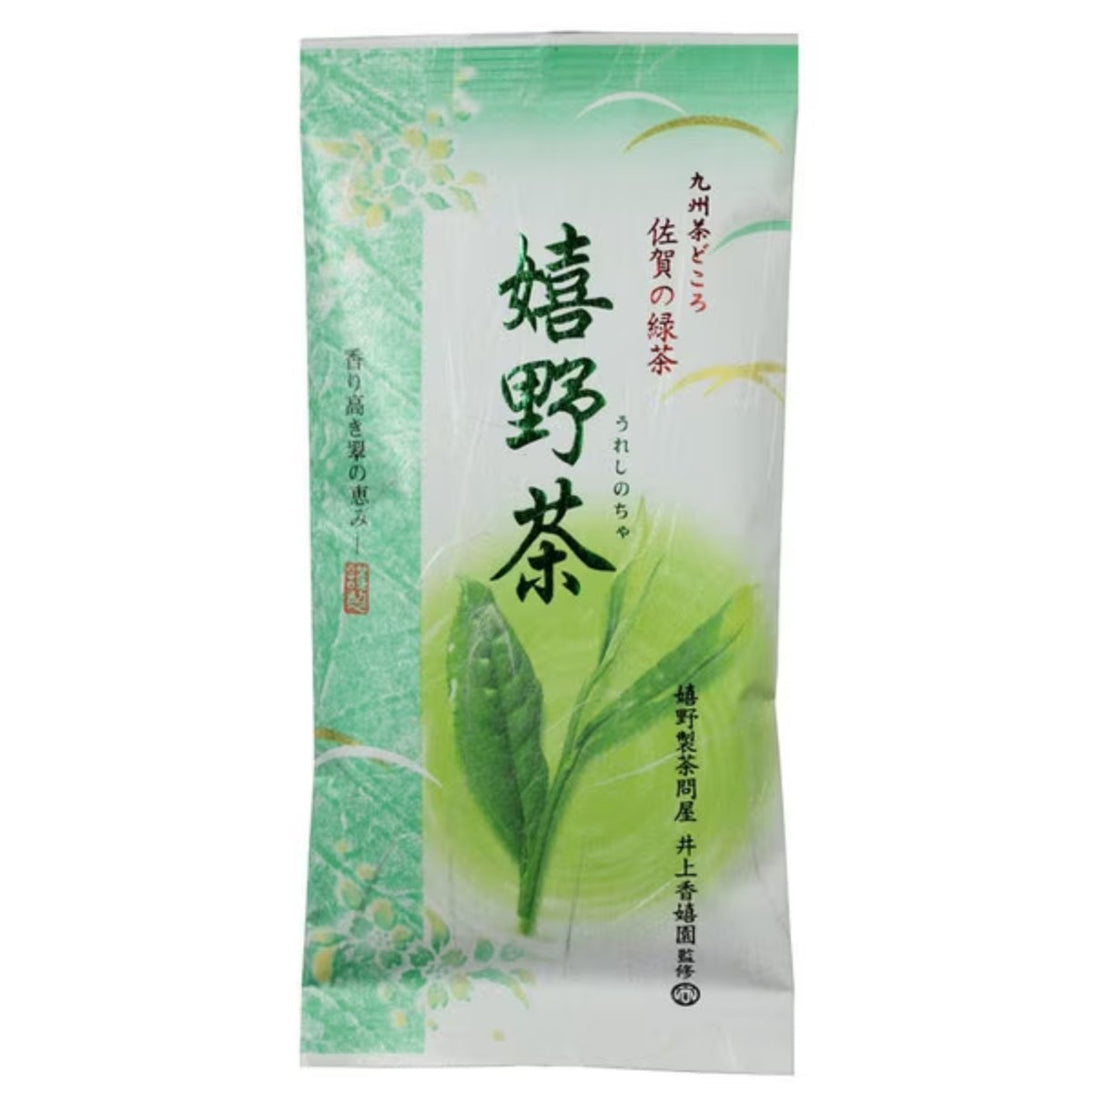 Juroen Saga green tea Ureshino tea 100g - NihonMura